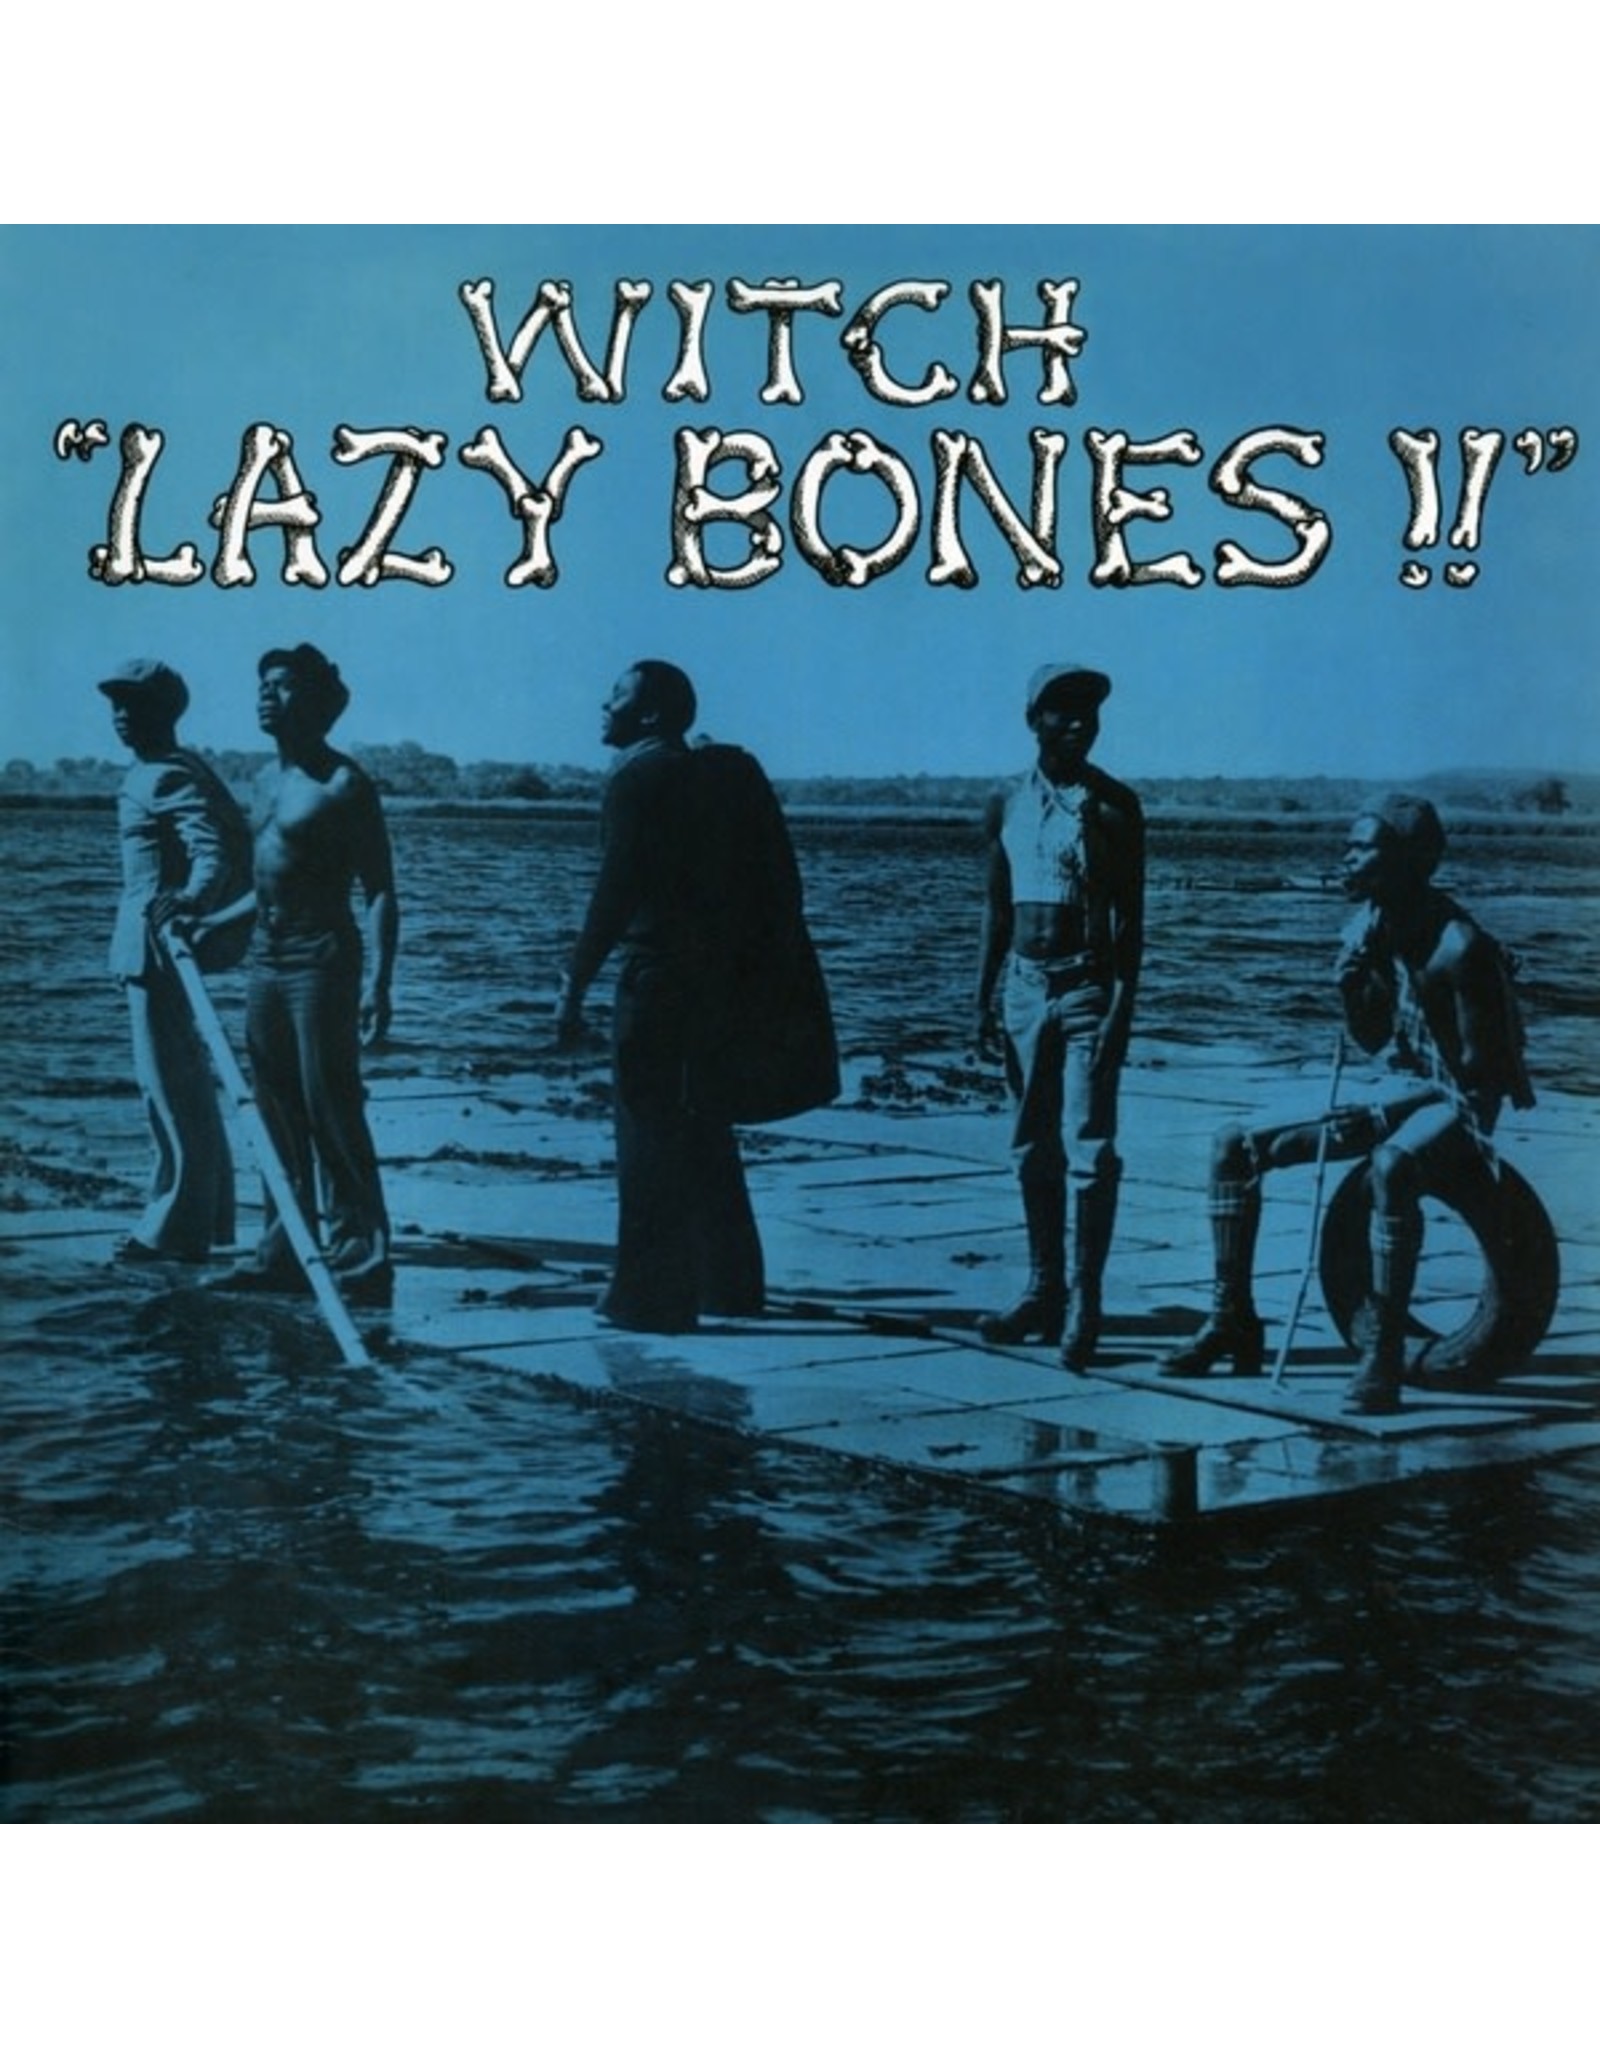 Now Again Witch: Lazy Bones!! (opaque orange) LP